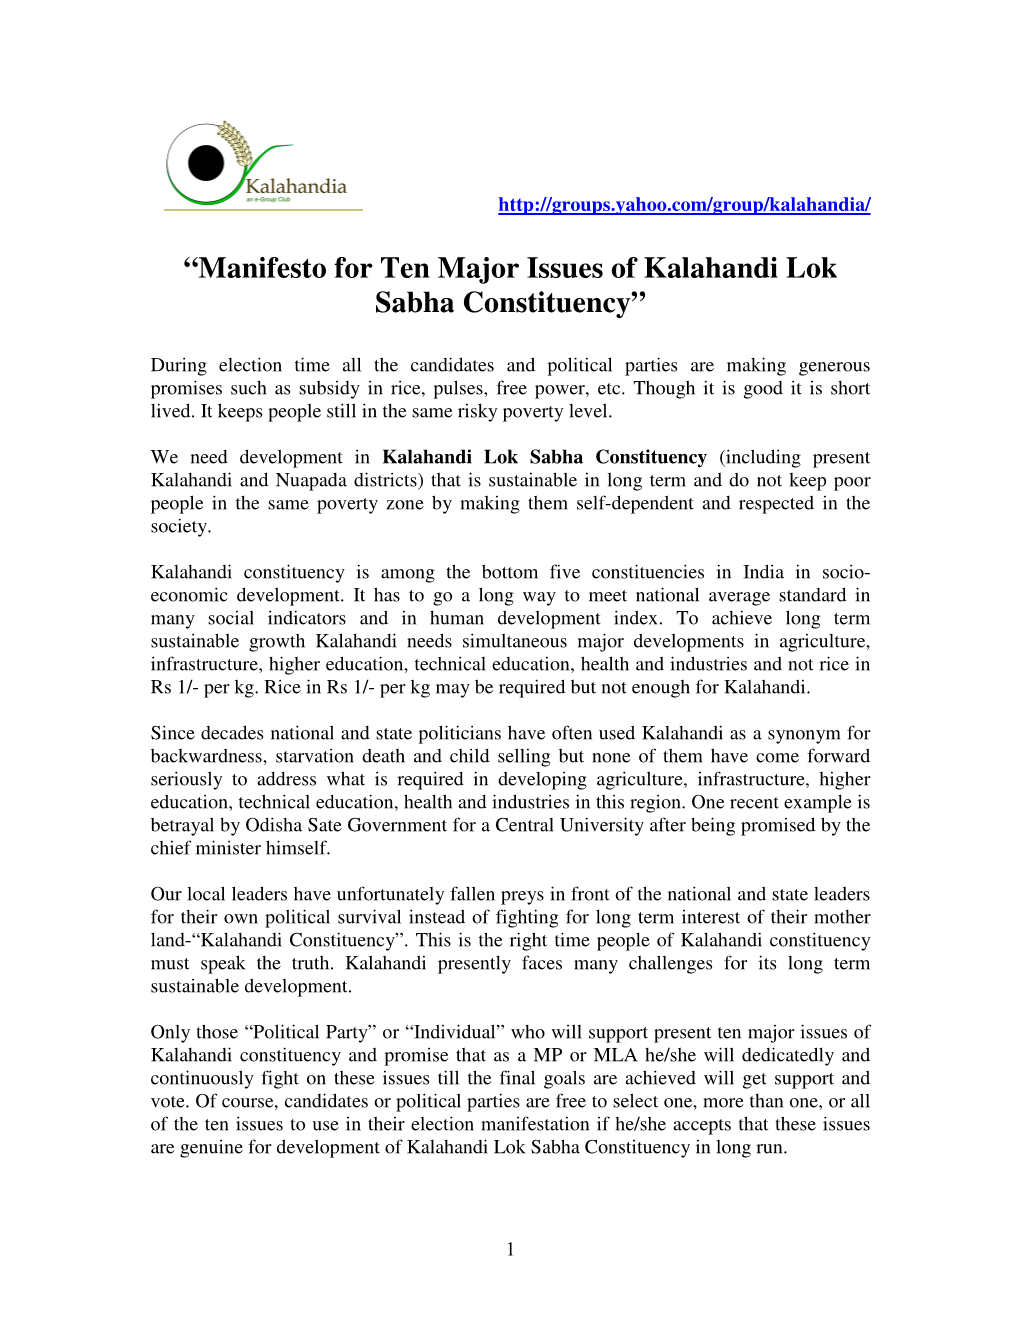 “Manifesto for Ten Major Issues of Kalahandi Lok Sabha Constituency”